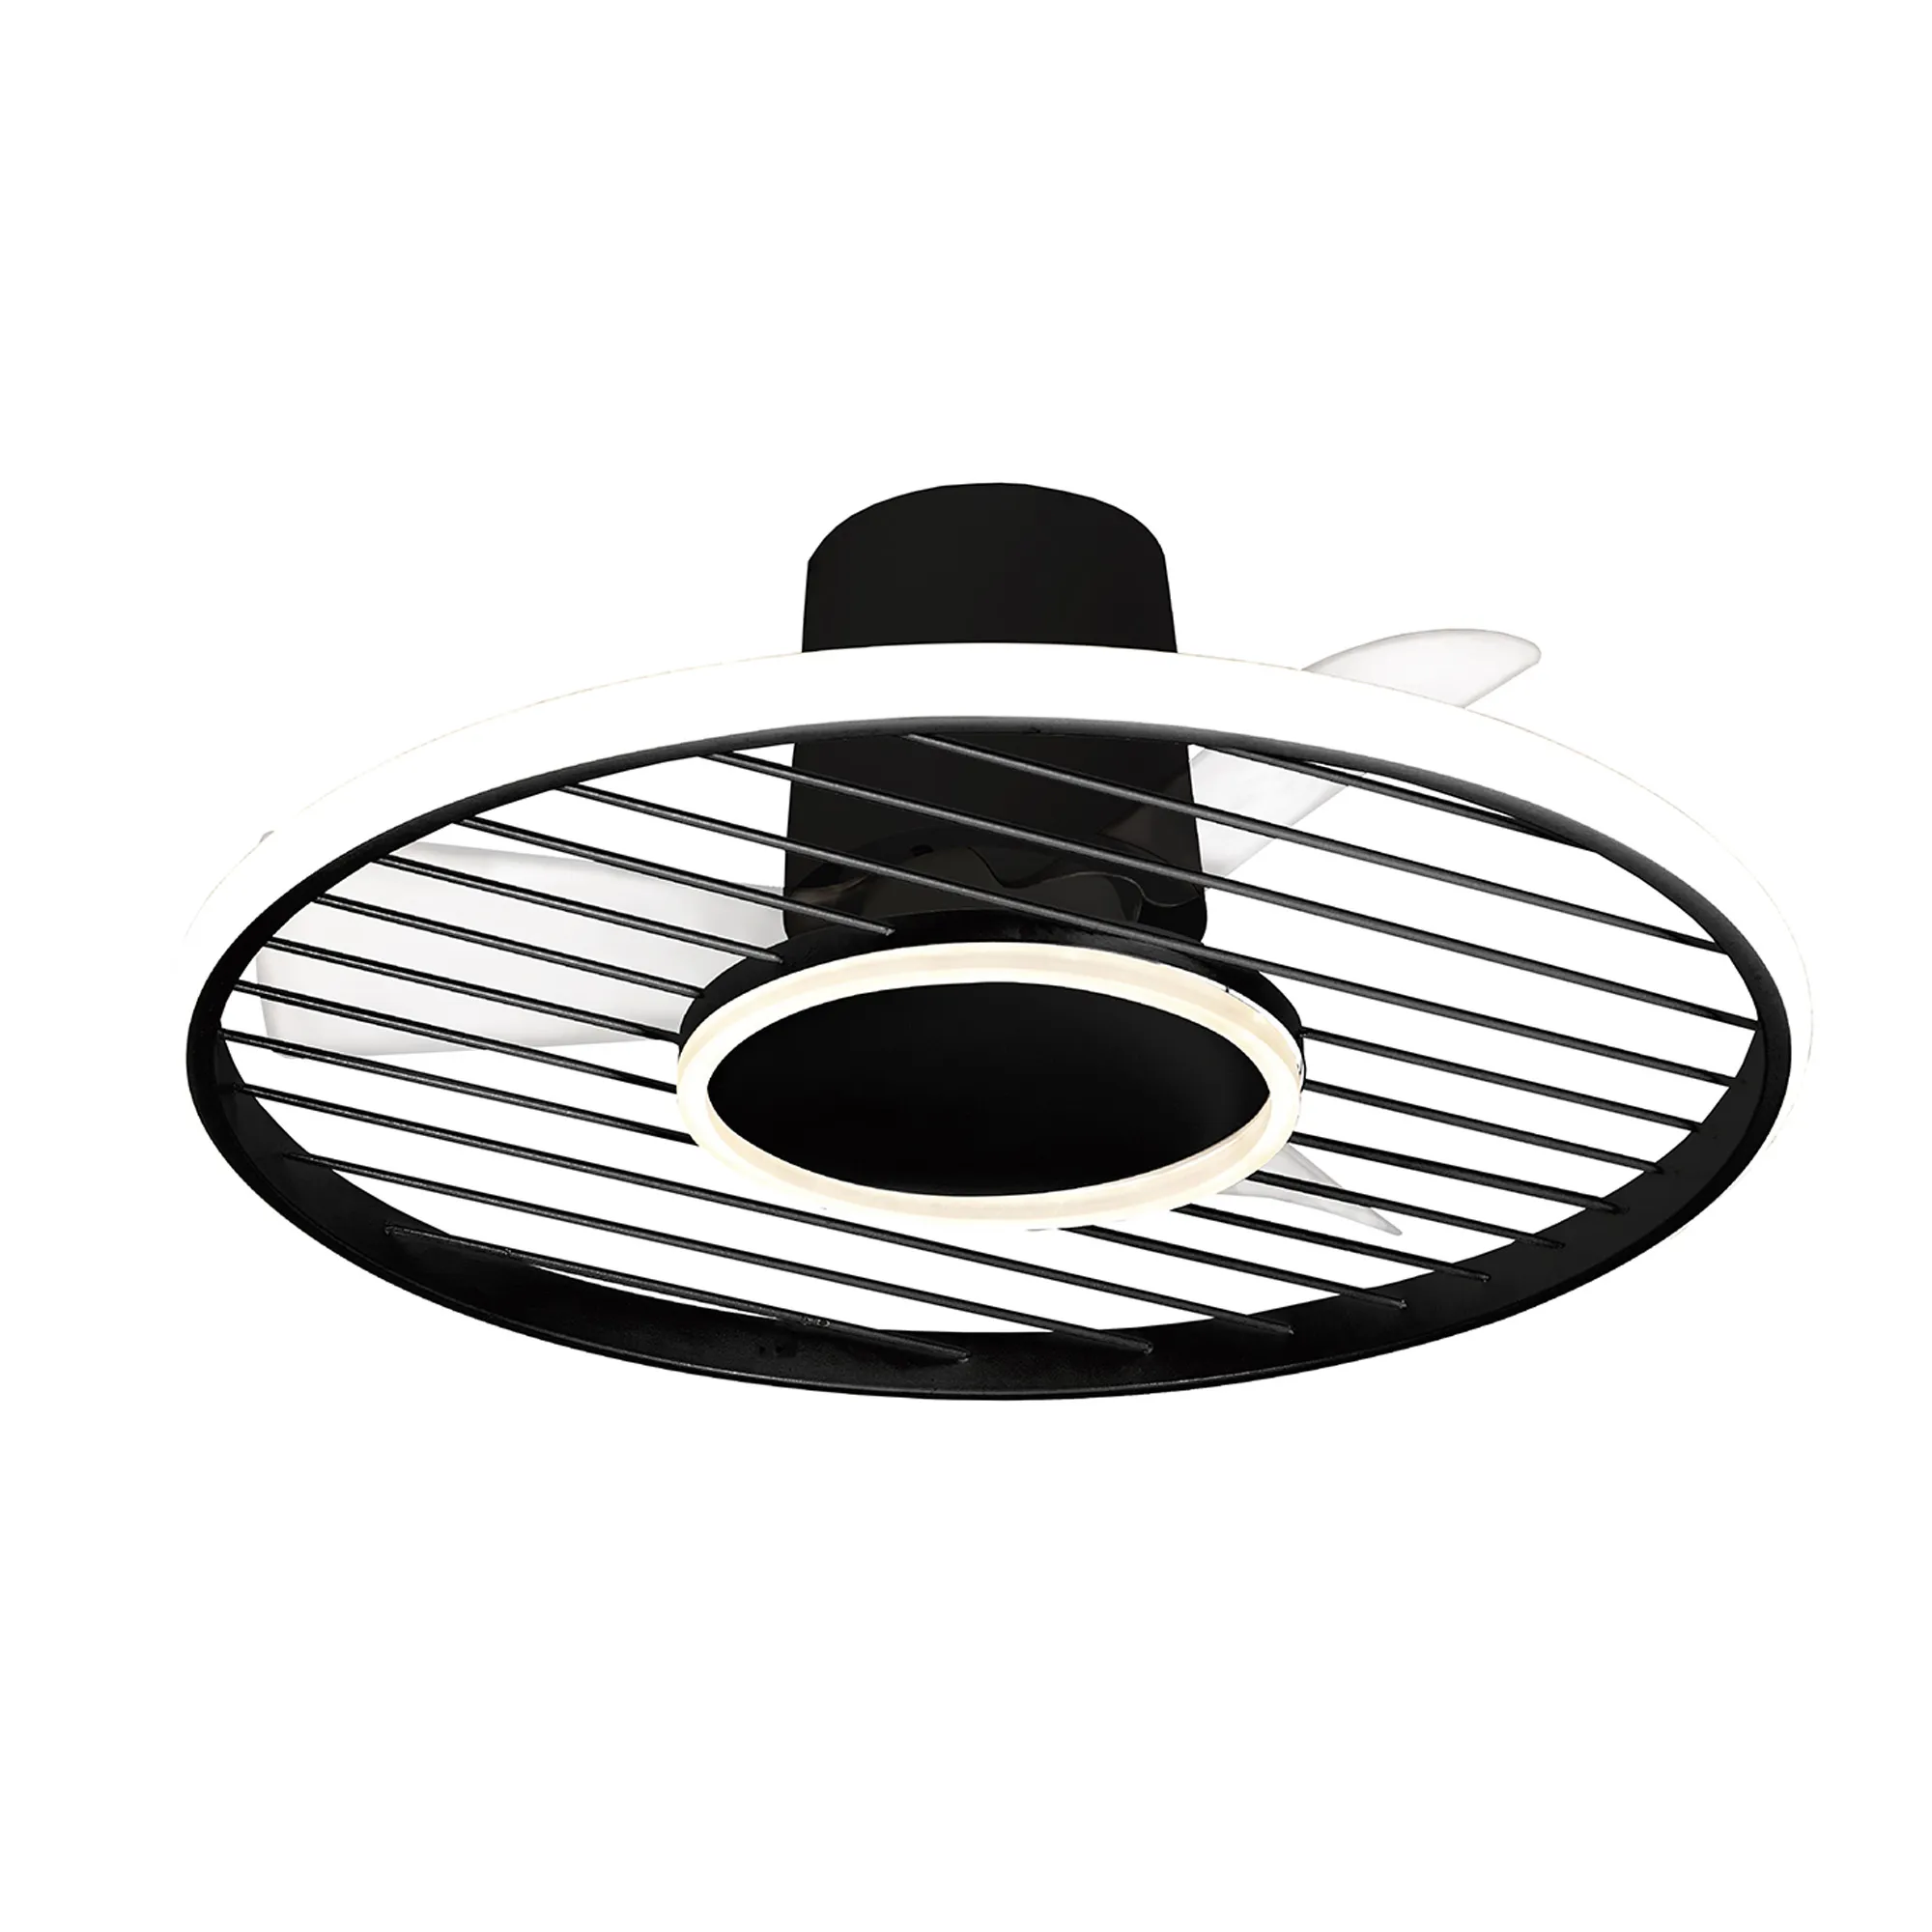 Soho Heating, Cooling & Ventilation Mantra Ceiling Fans